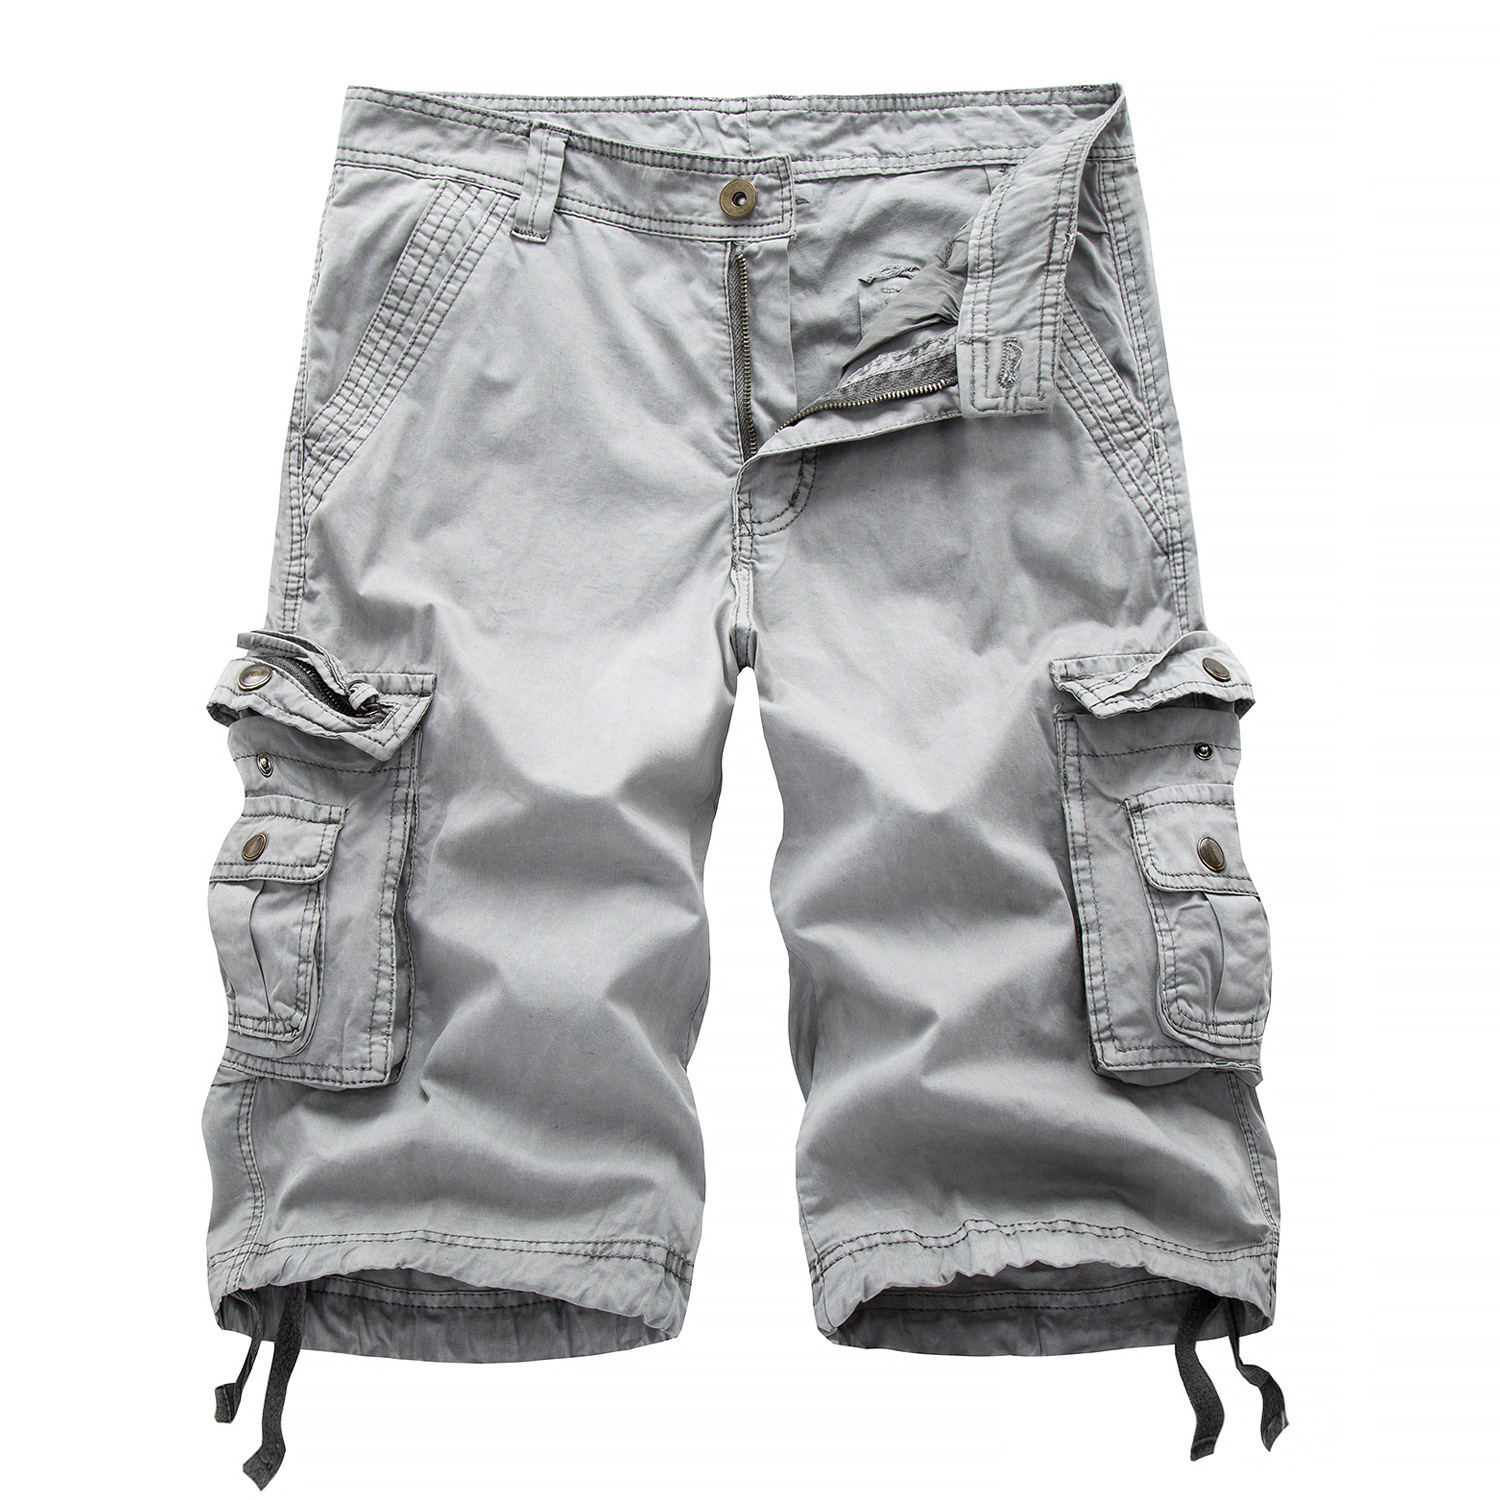 Men's Outdoor Casual Cotton Chic Multi-bag Cargo Shorts